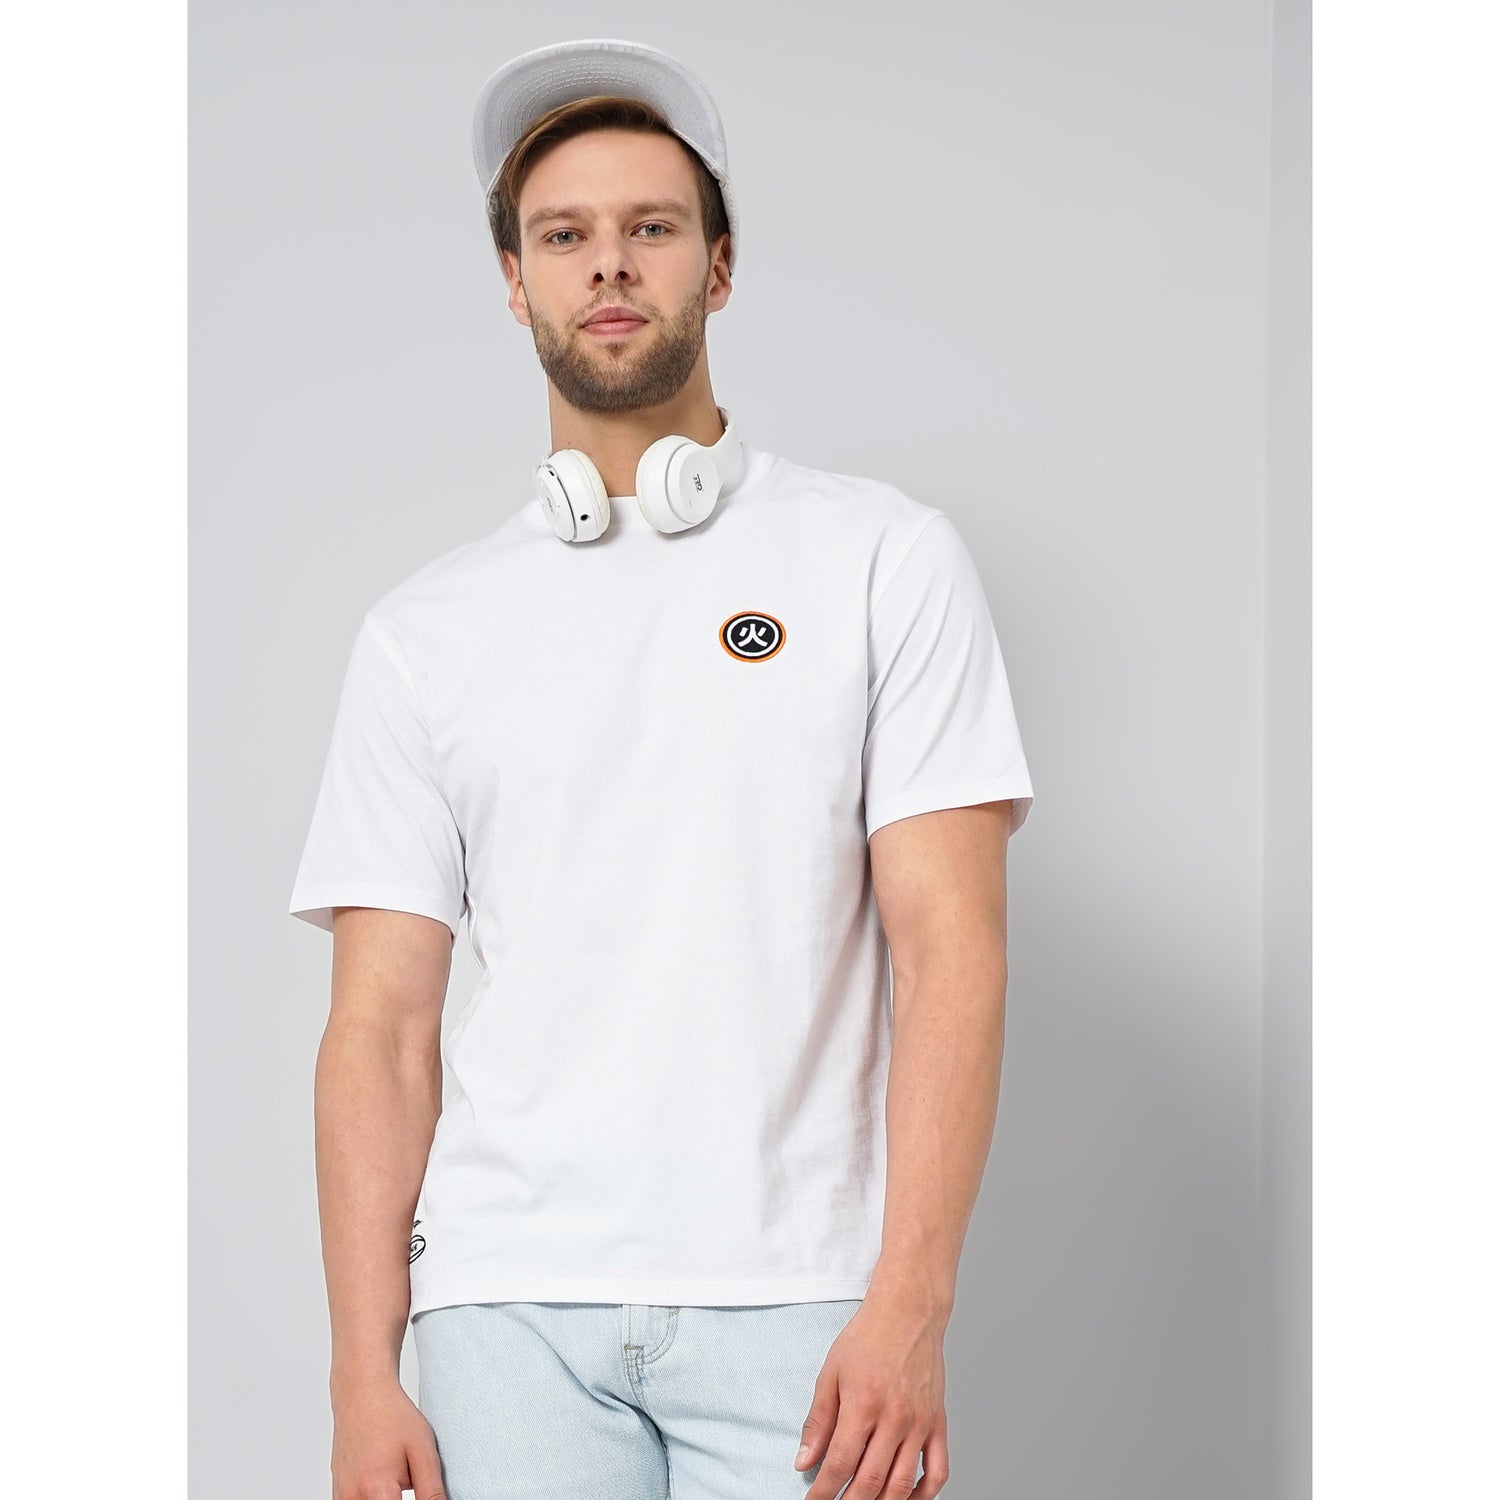 Naruto - White Printed Round Neck Cotton T-shirt